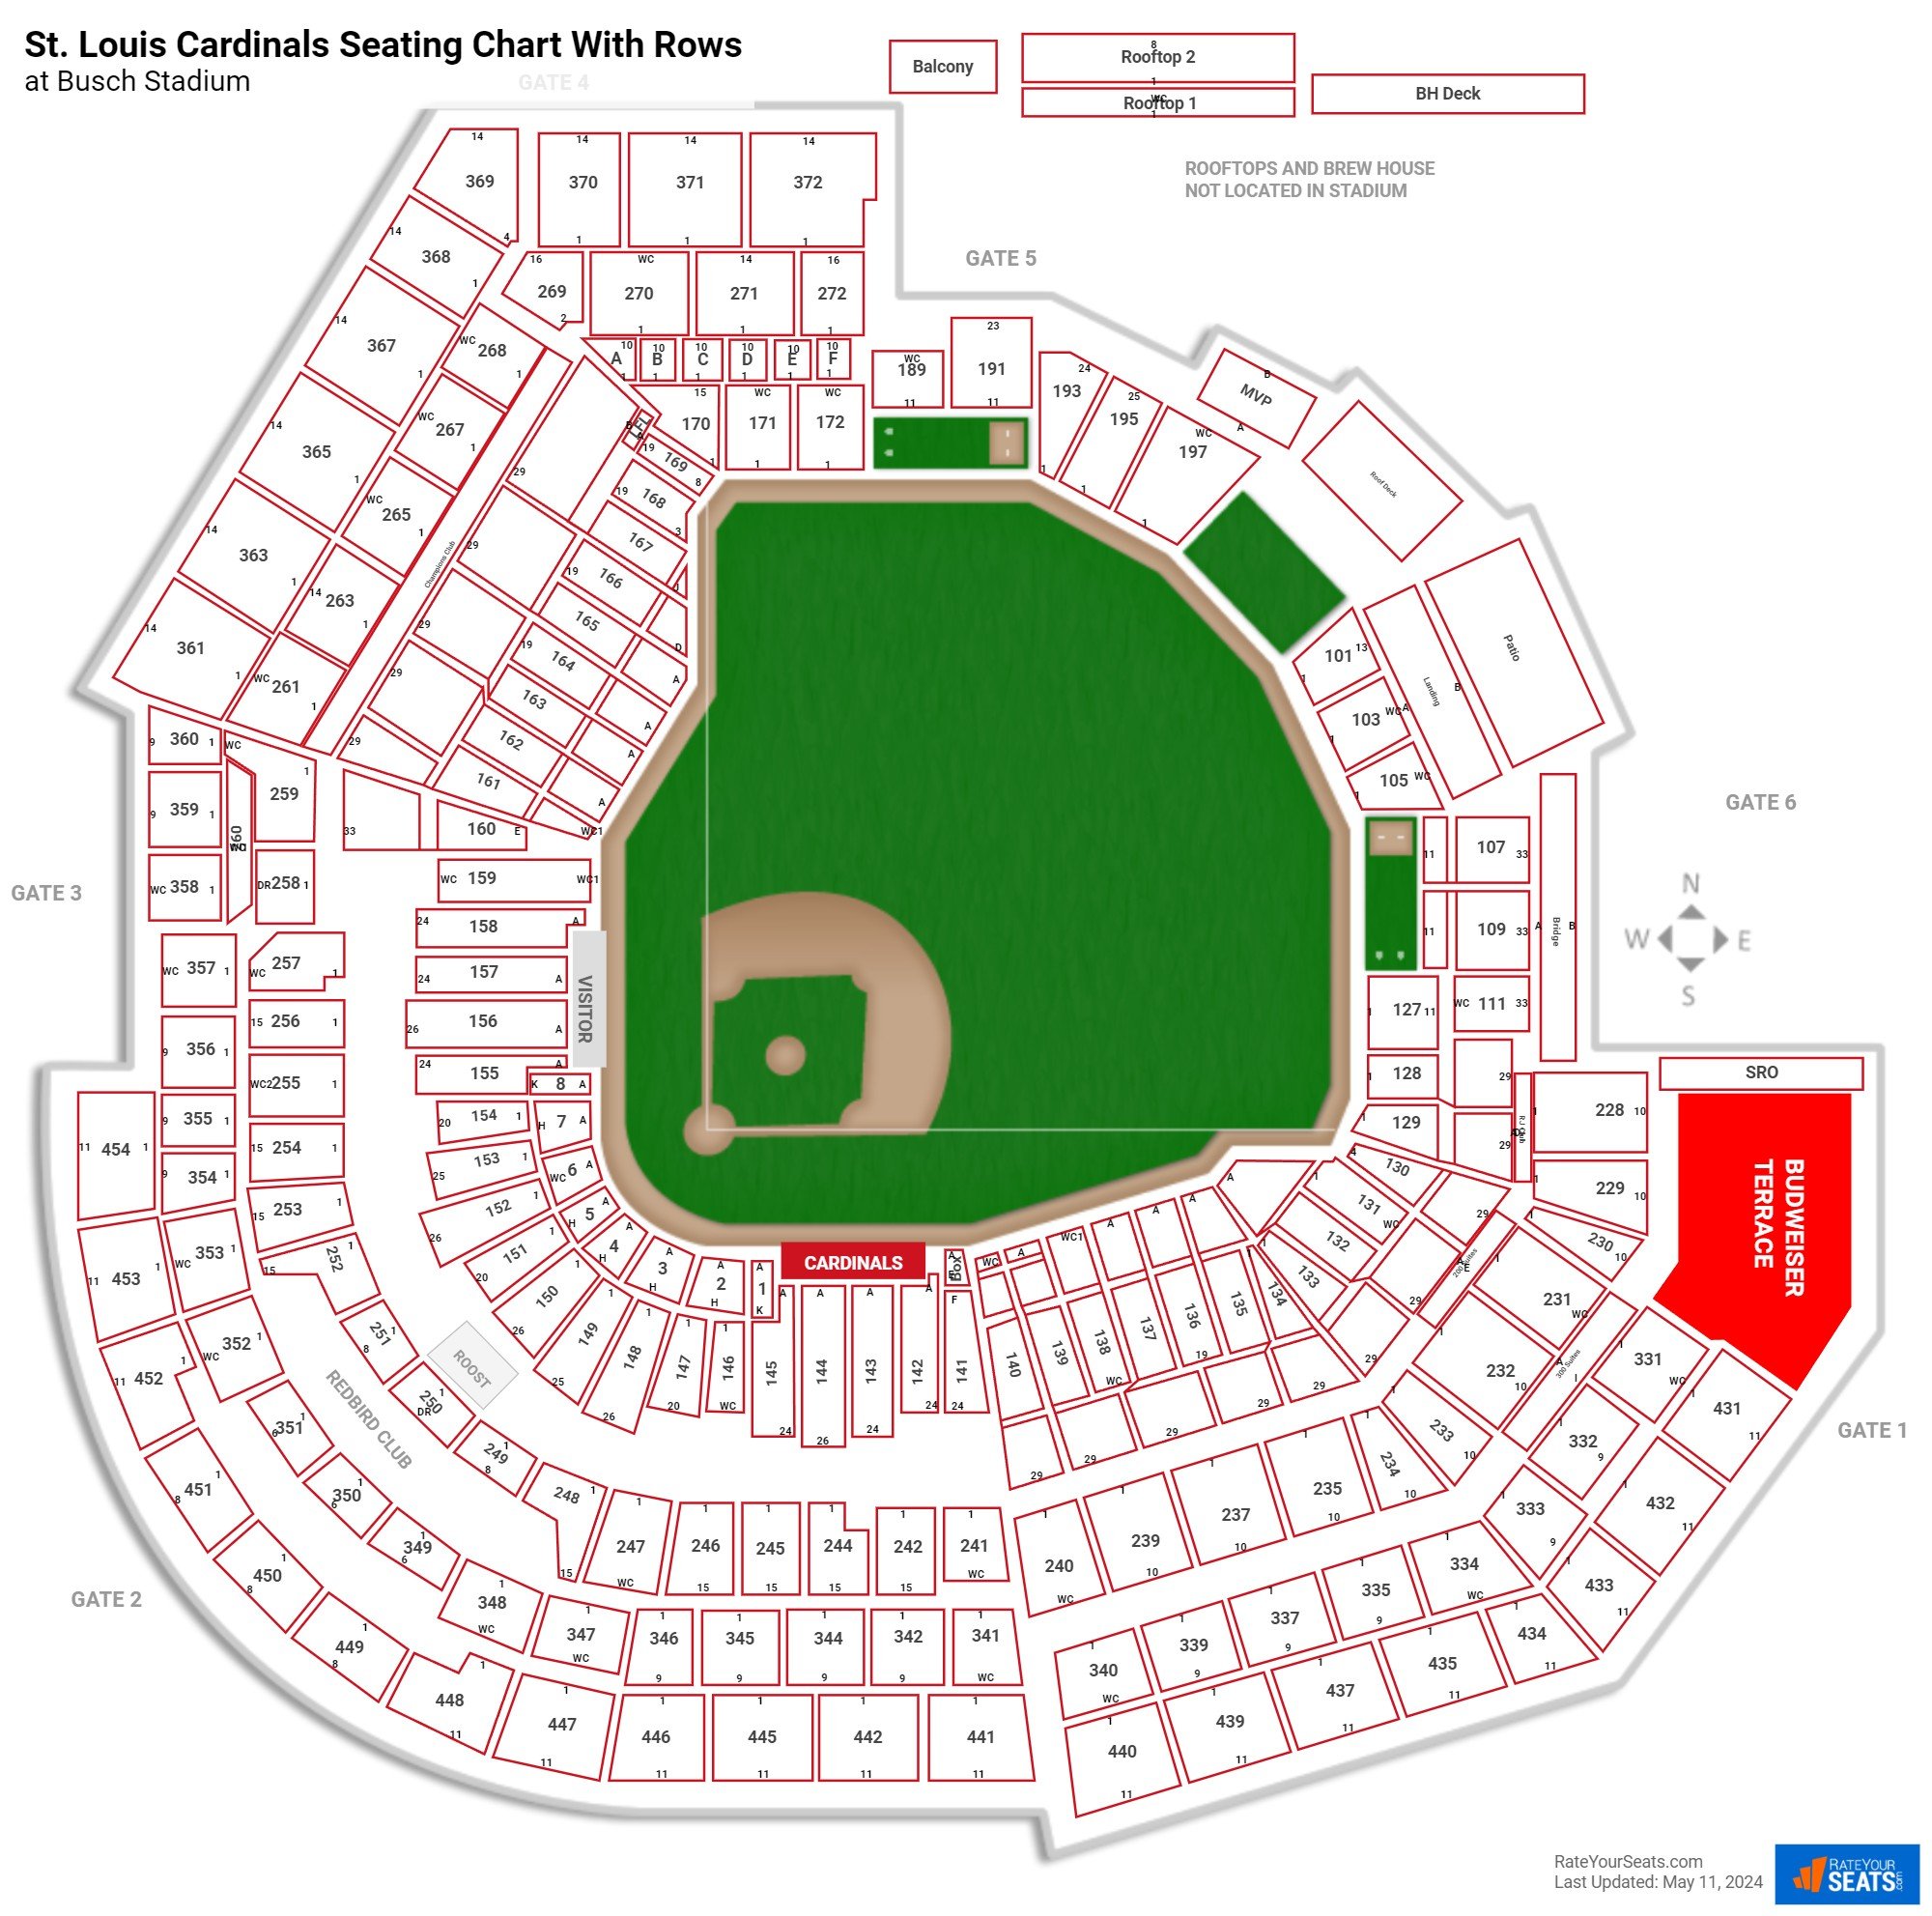 Busch Stadium Seating for Cardinals Games - nrd.kbic-nsn.gov